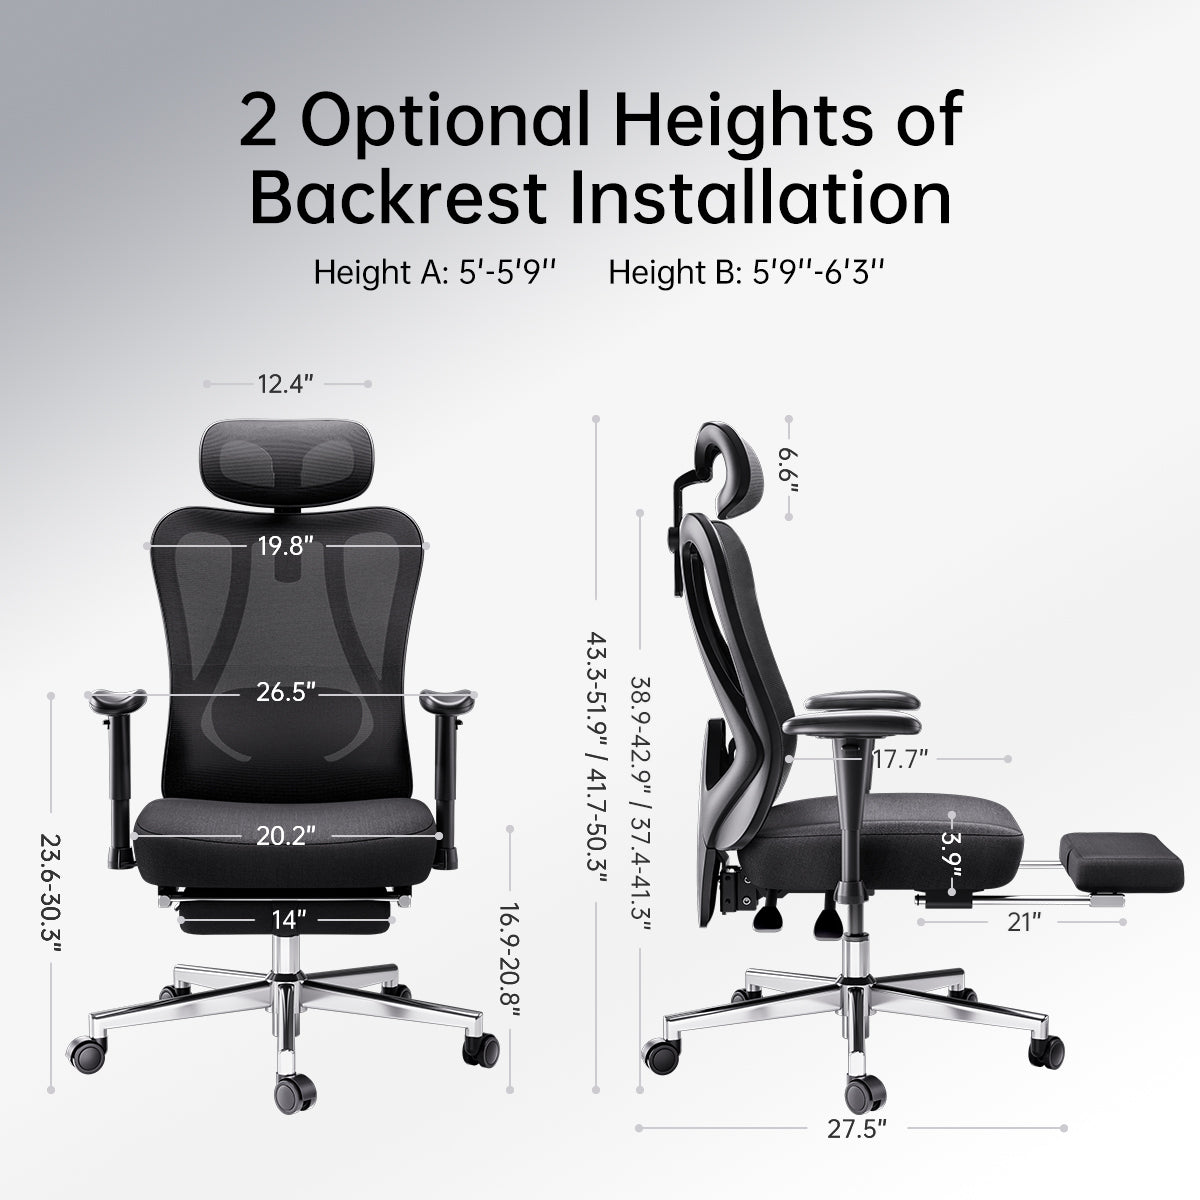 HBADA P3 Ergonomic Chair With Footrest, Black Color